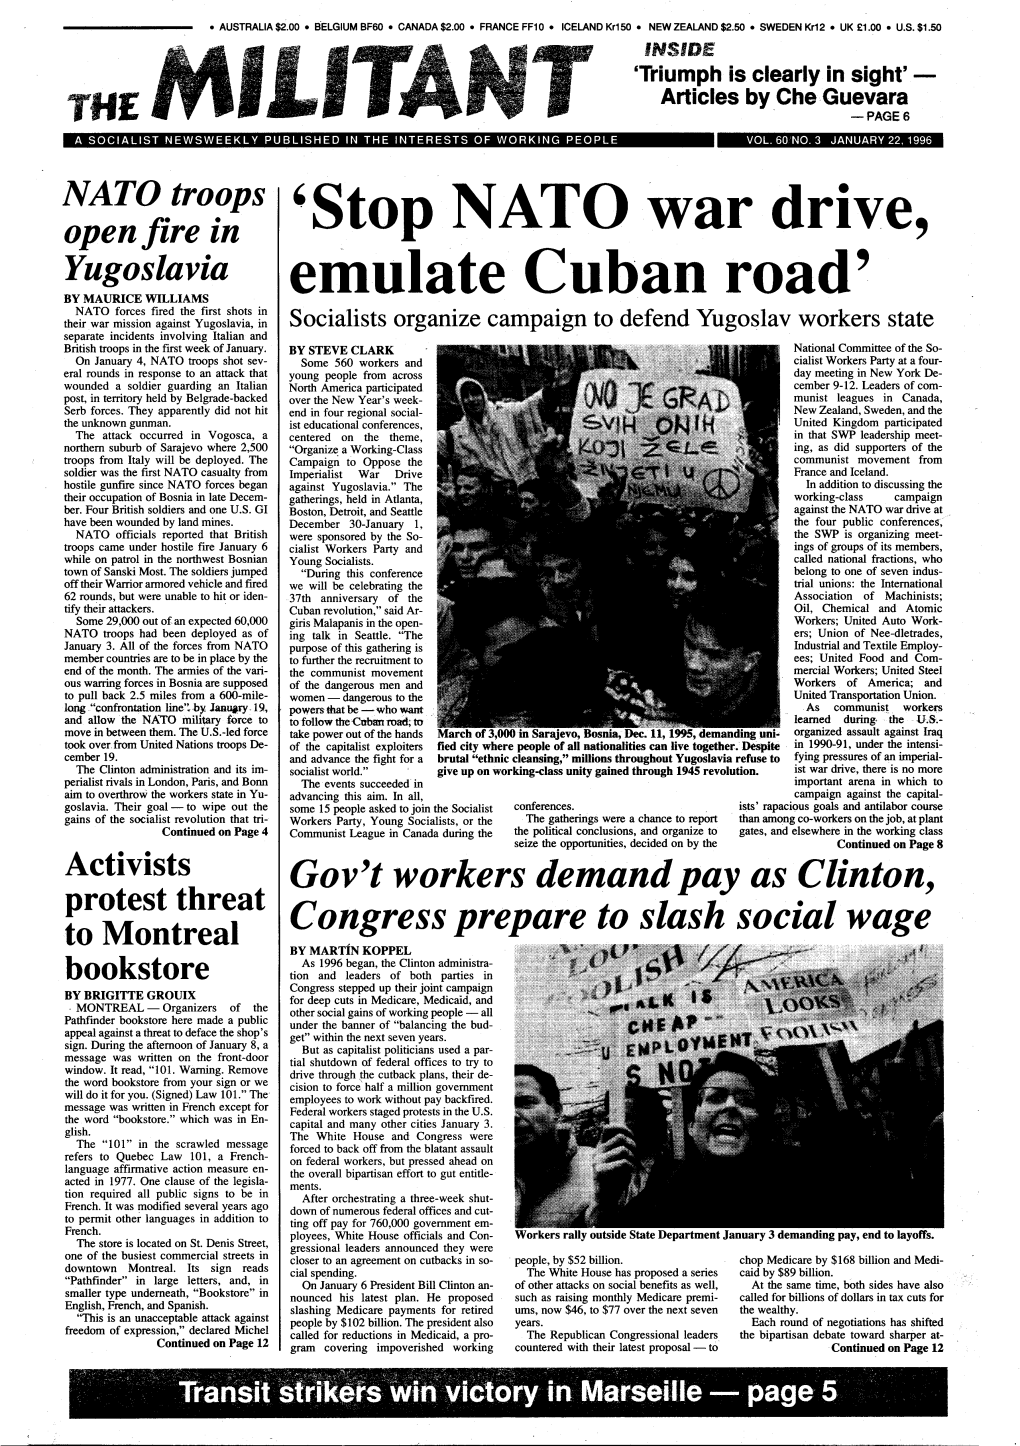 'Stop NATO War Drive, Emulate Cuban Road'